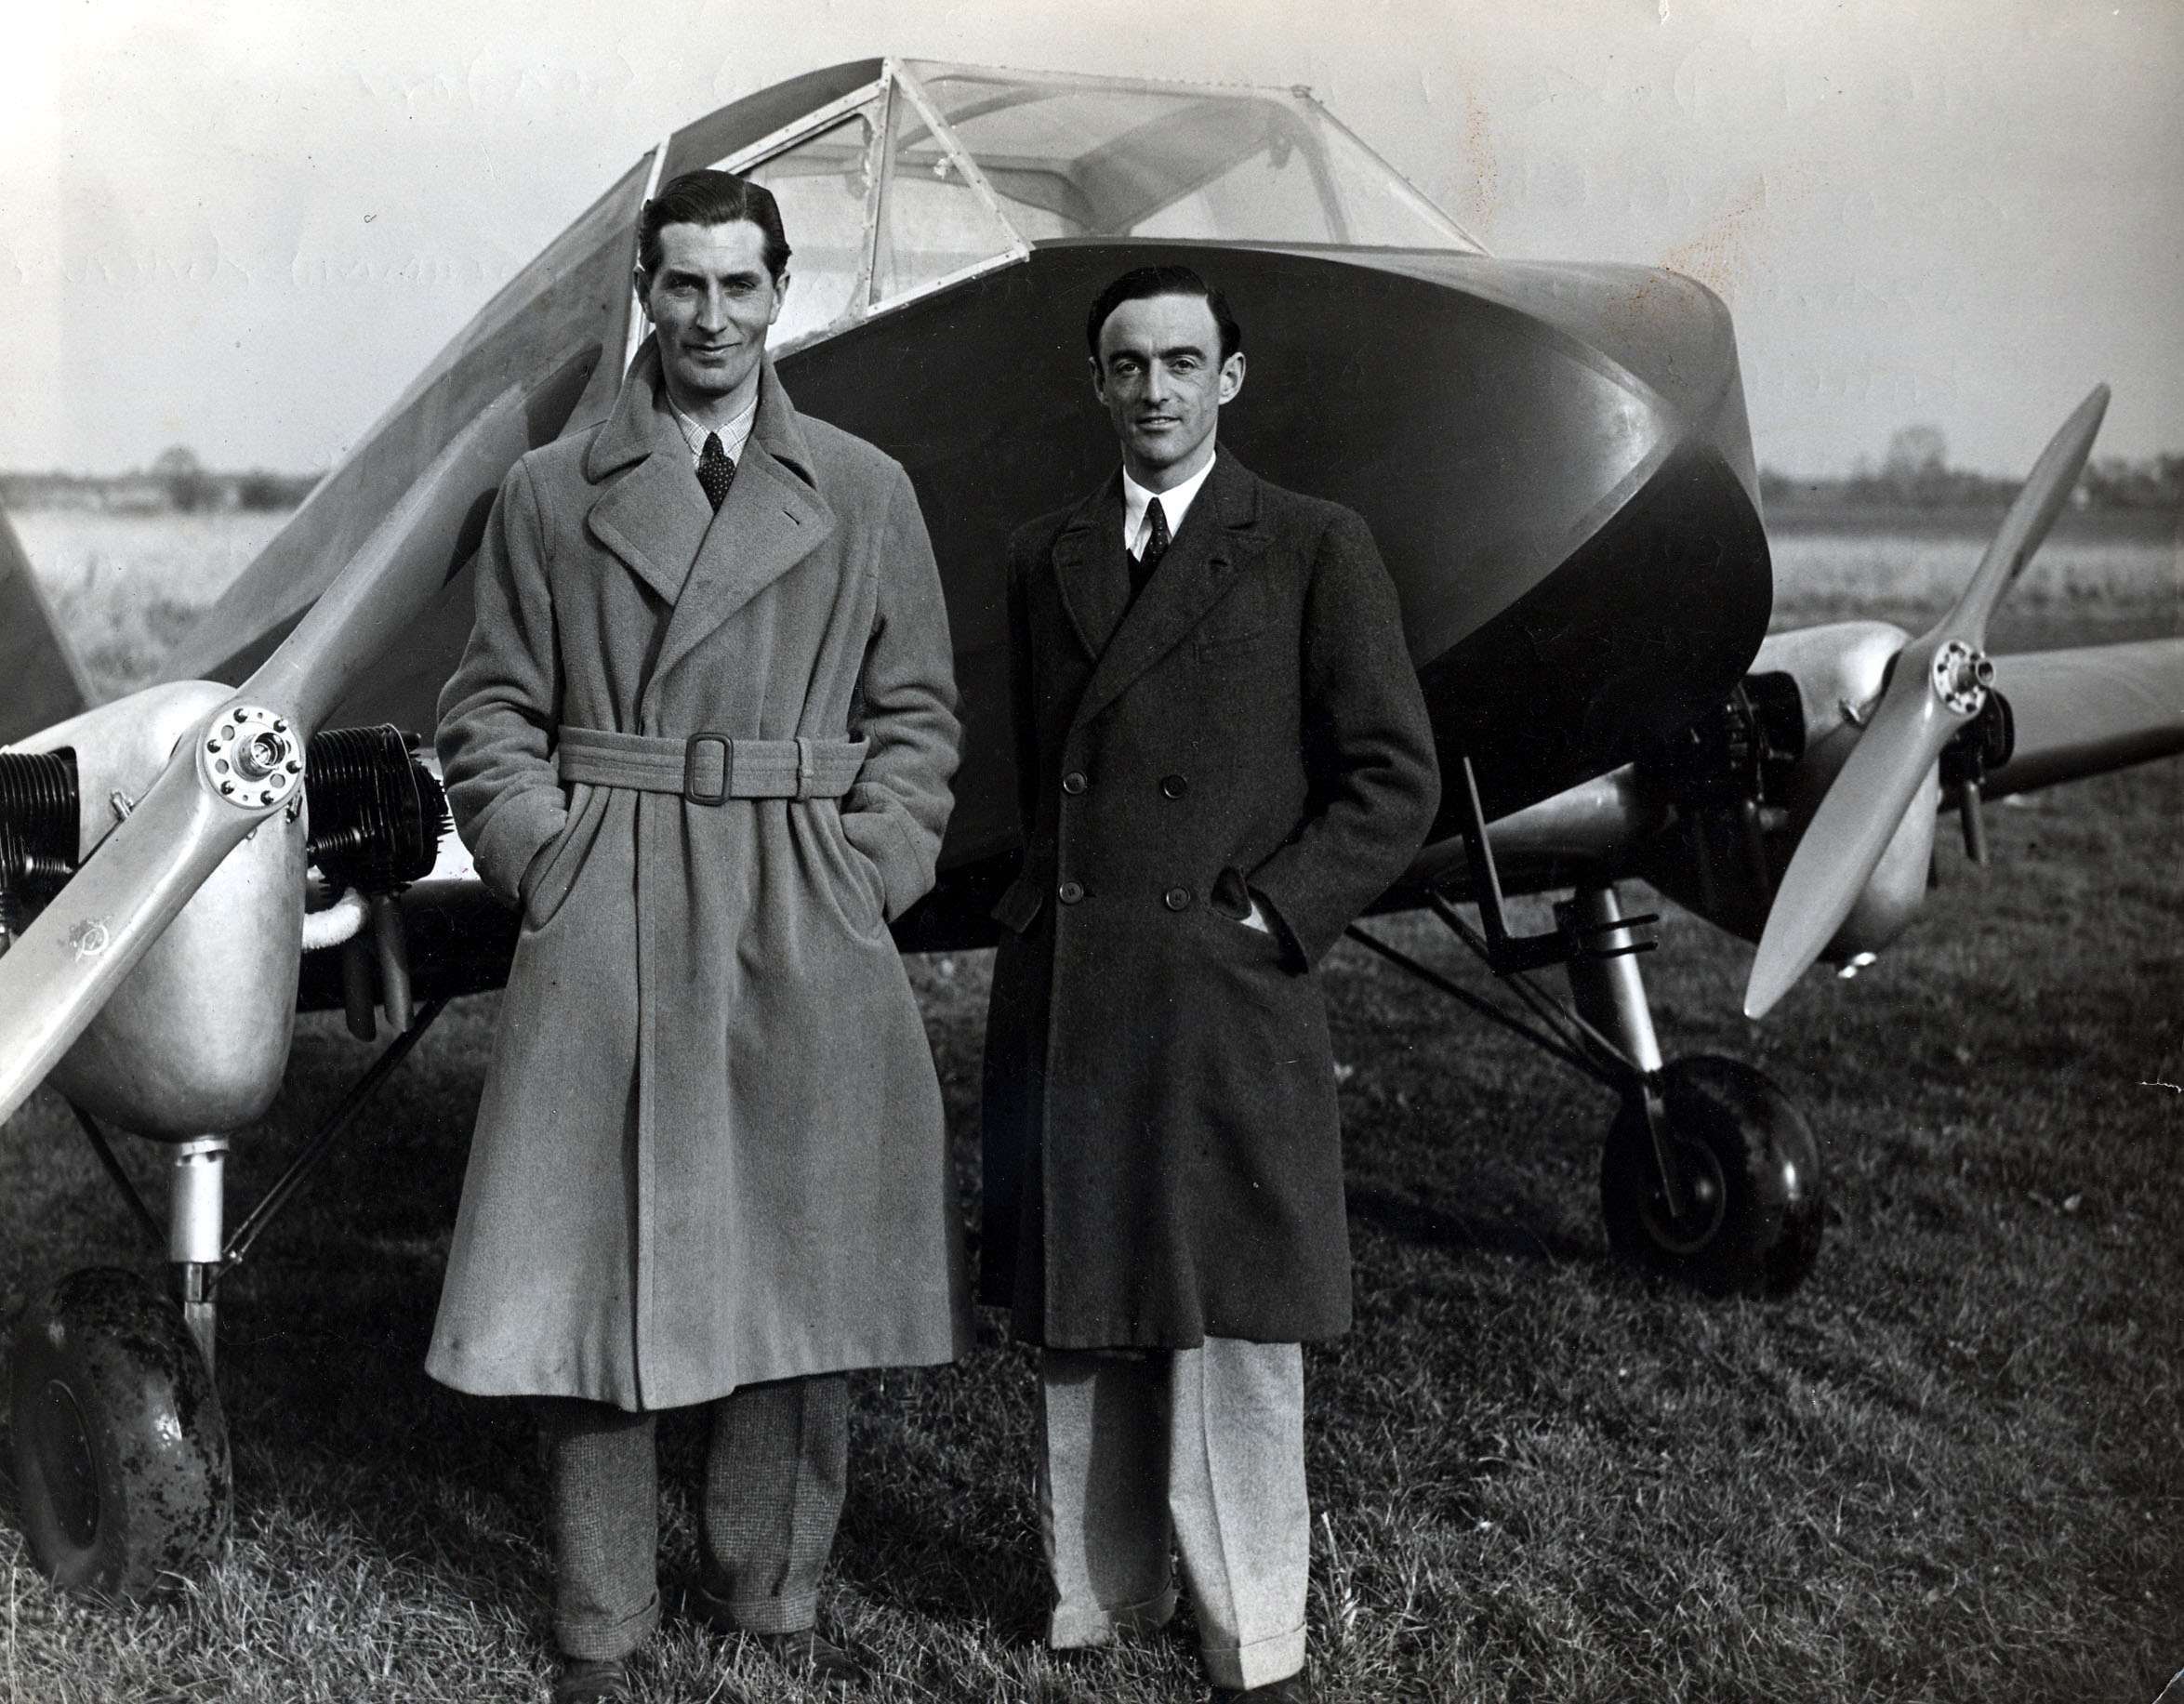 9th-duke-and-mr.-edmund-horndern-with-a-plane-of-their-own-design-1939.jpg